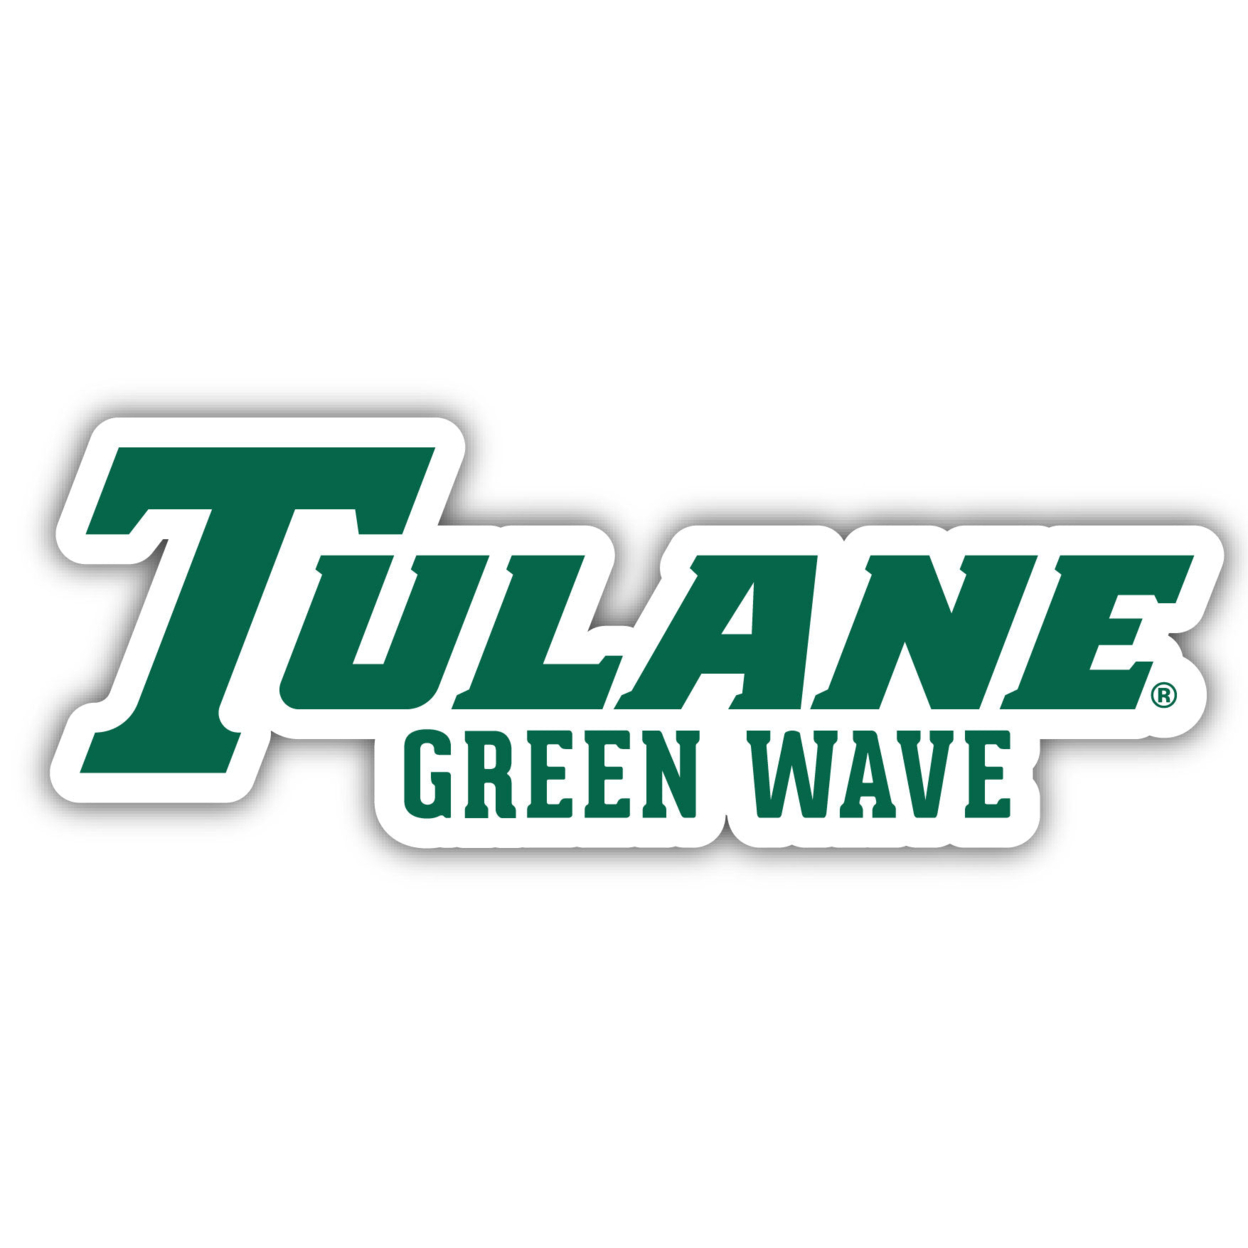 Tulane University Green Wave 10 Inch Vinyl Decal Sticker